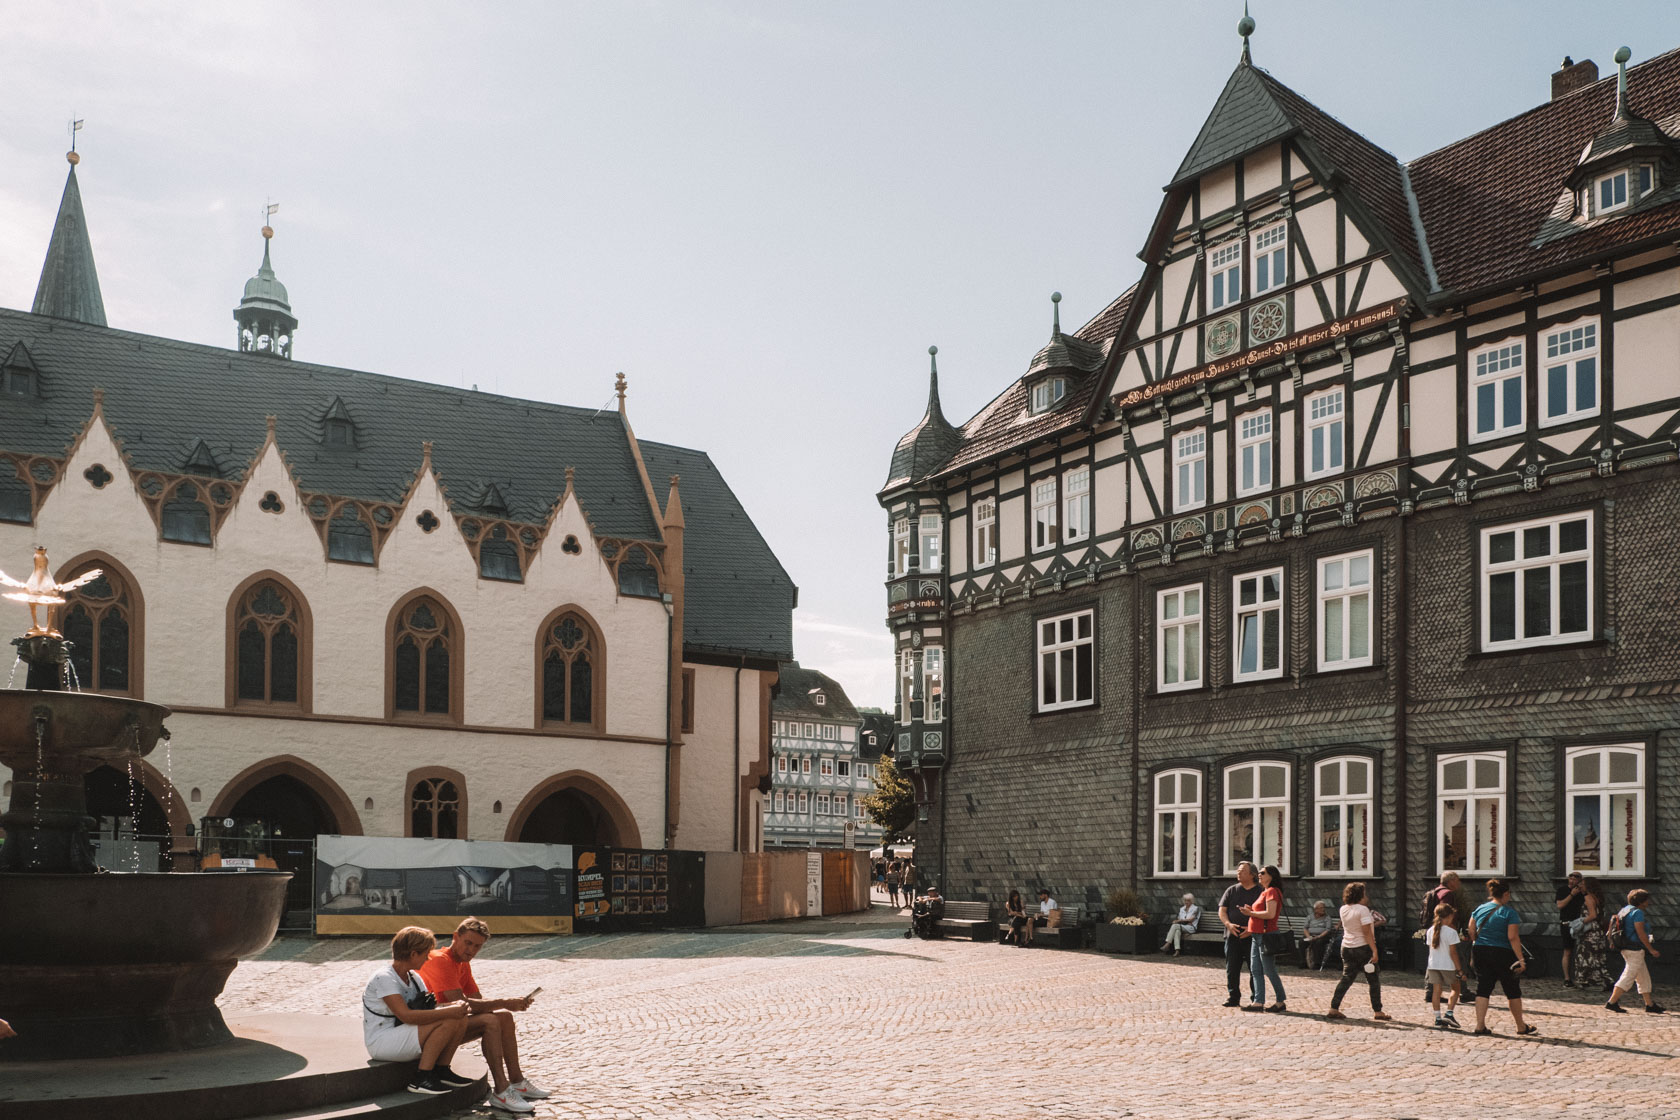 Goslar town square